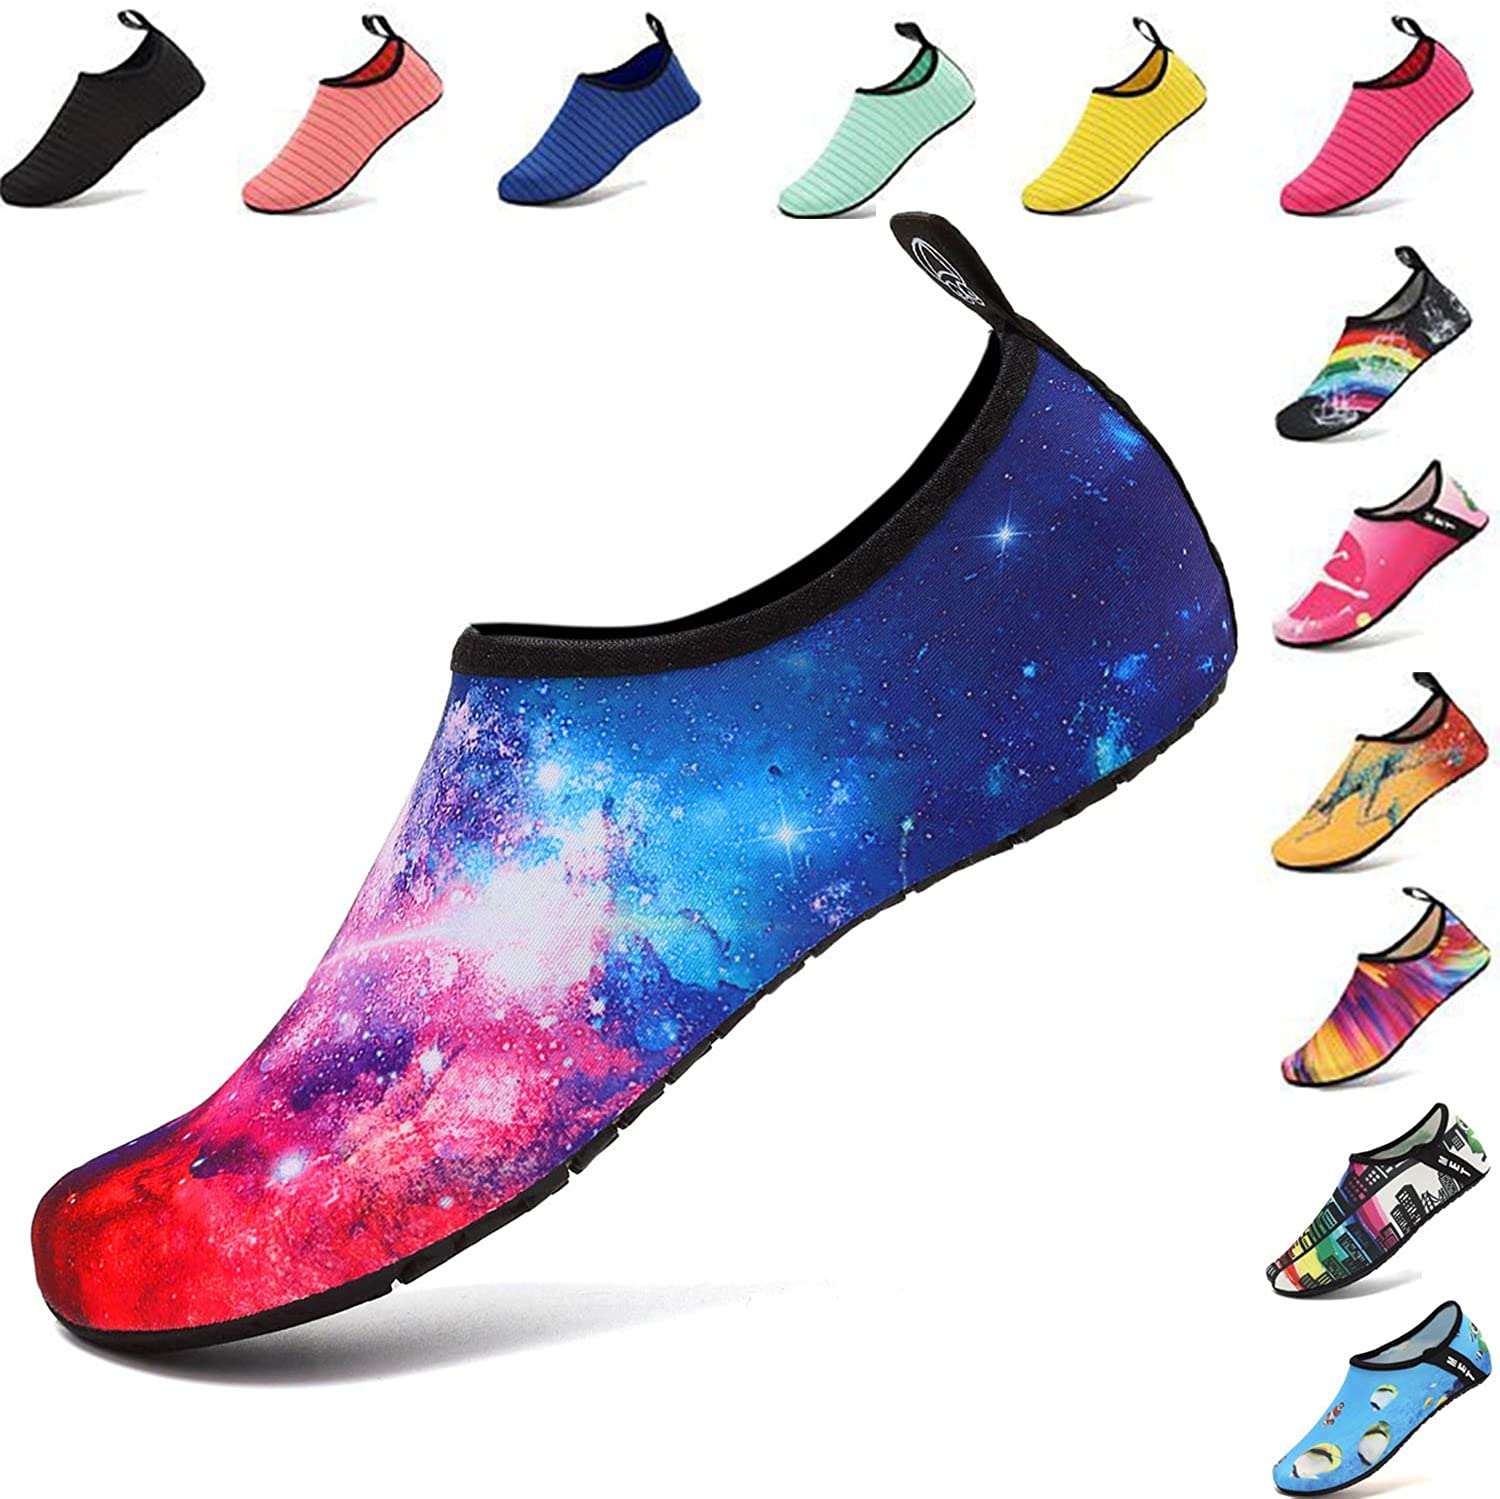 Details about   VIFUUR Water Sports Shoes Barefoot Quick-Dry Aqua Yoga Socks Slip-on for Men Wom 